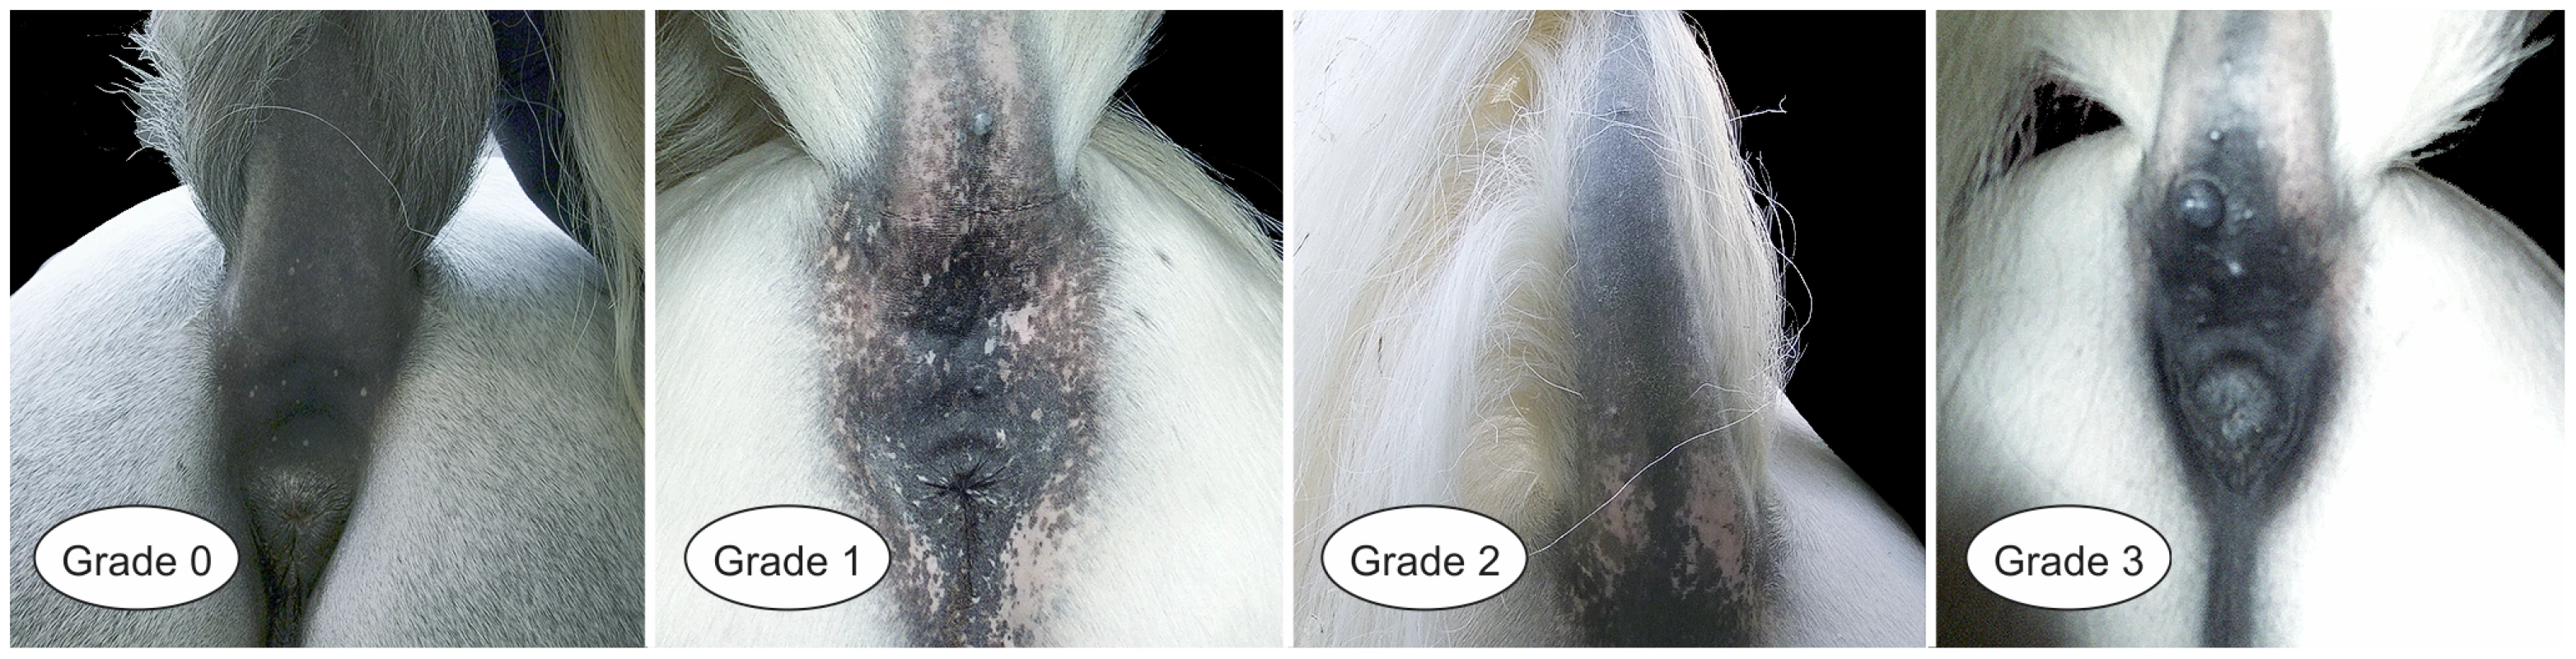 Variation of melanoma grade in four grey Lipizzan horses.